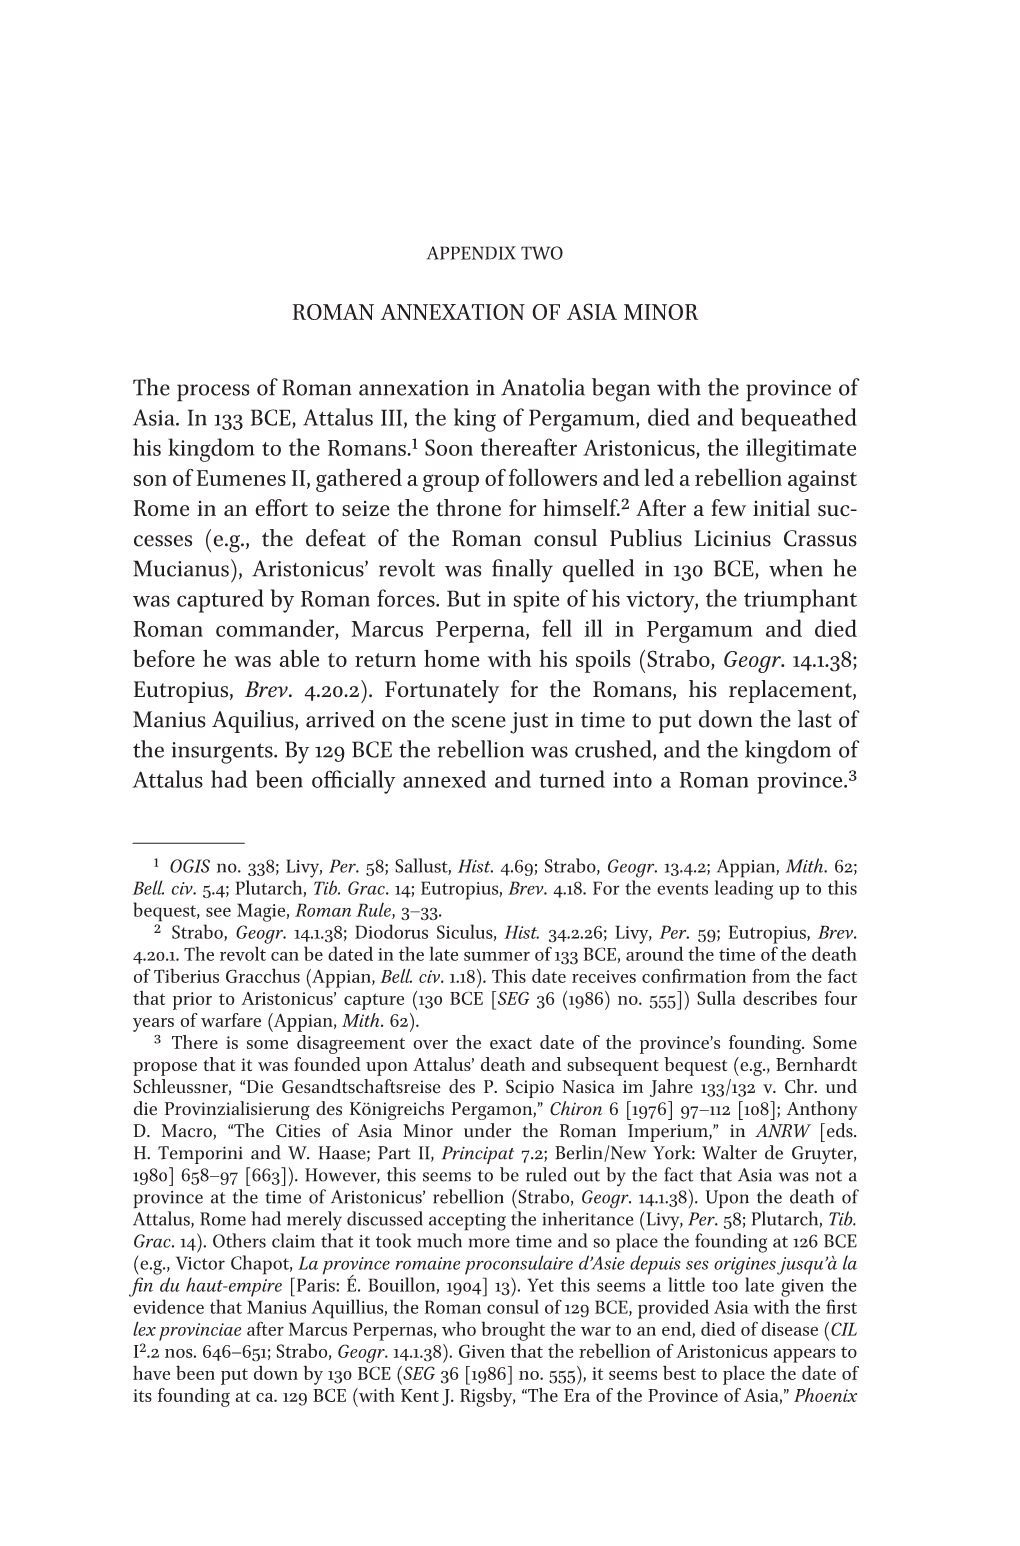 Roman Annexation of Asia Minor the Process of Roman Annexation